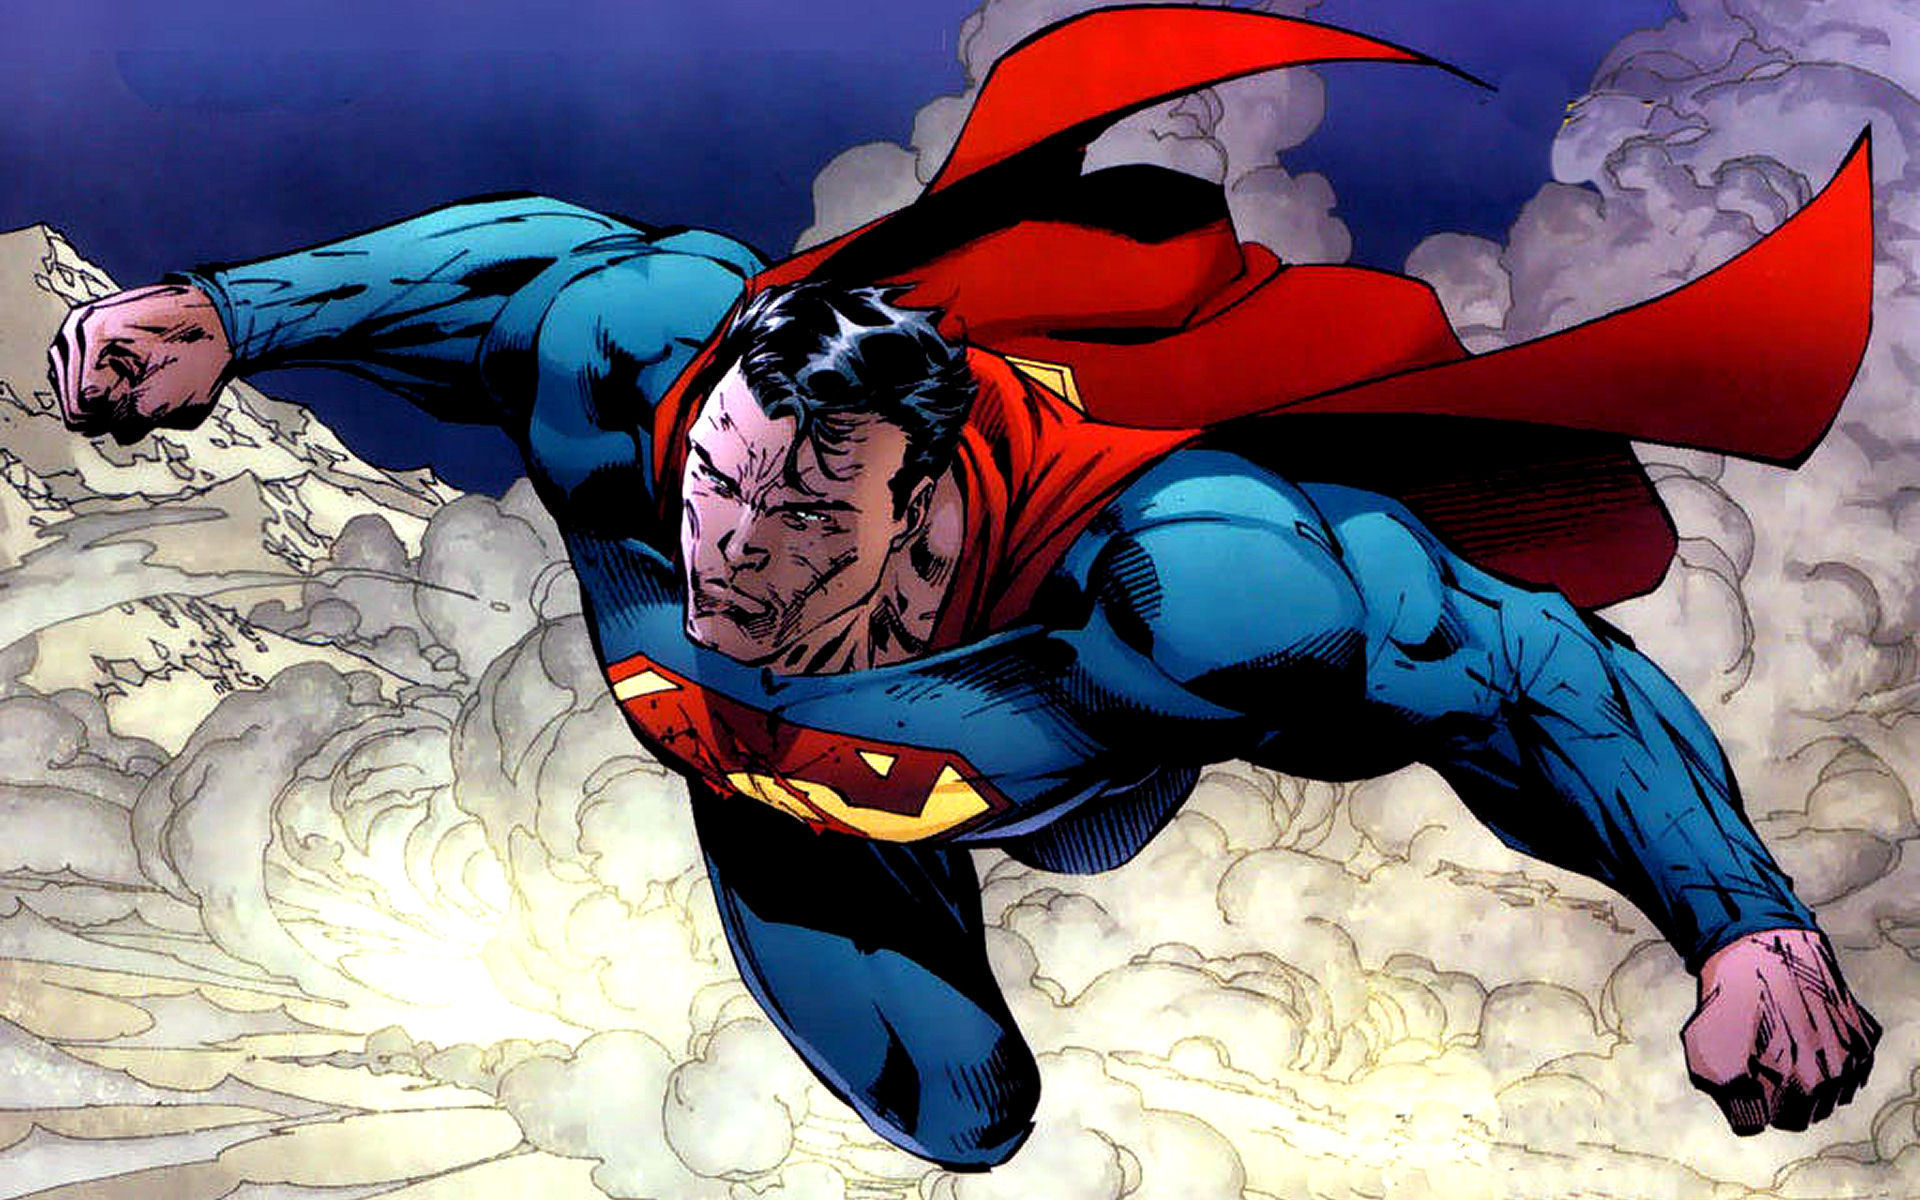 Niko of the strongest superman Cosmic armour superman Kal Kent 1 million Superboy prime Post Crisis superman